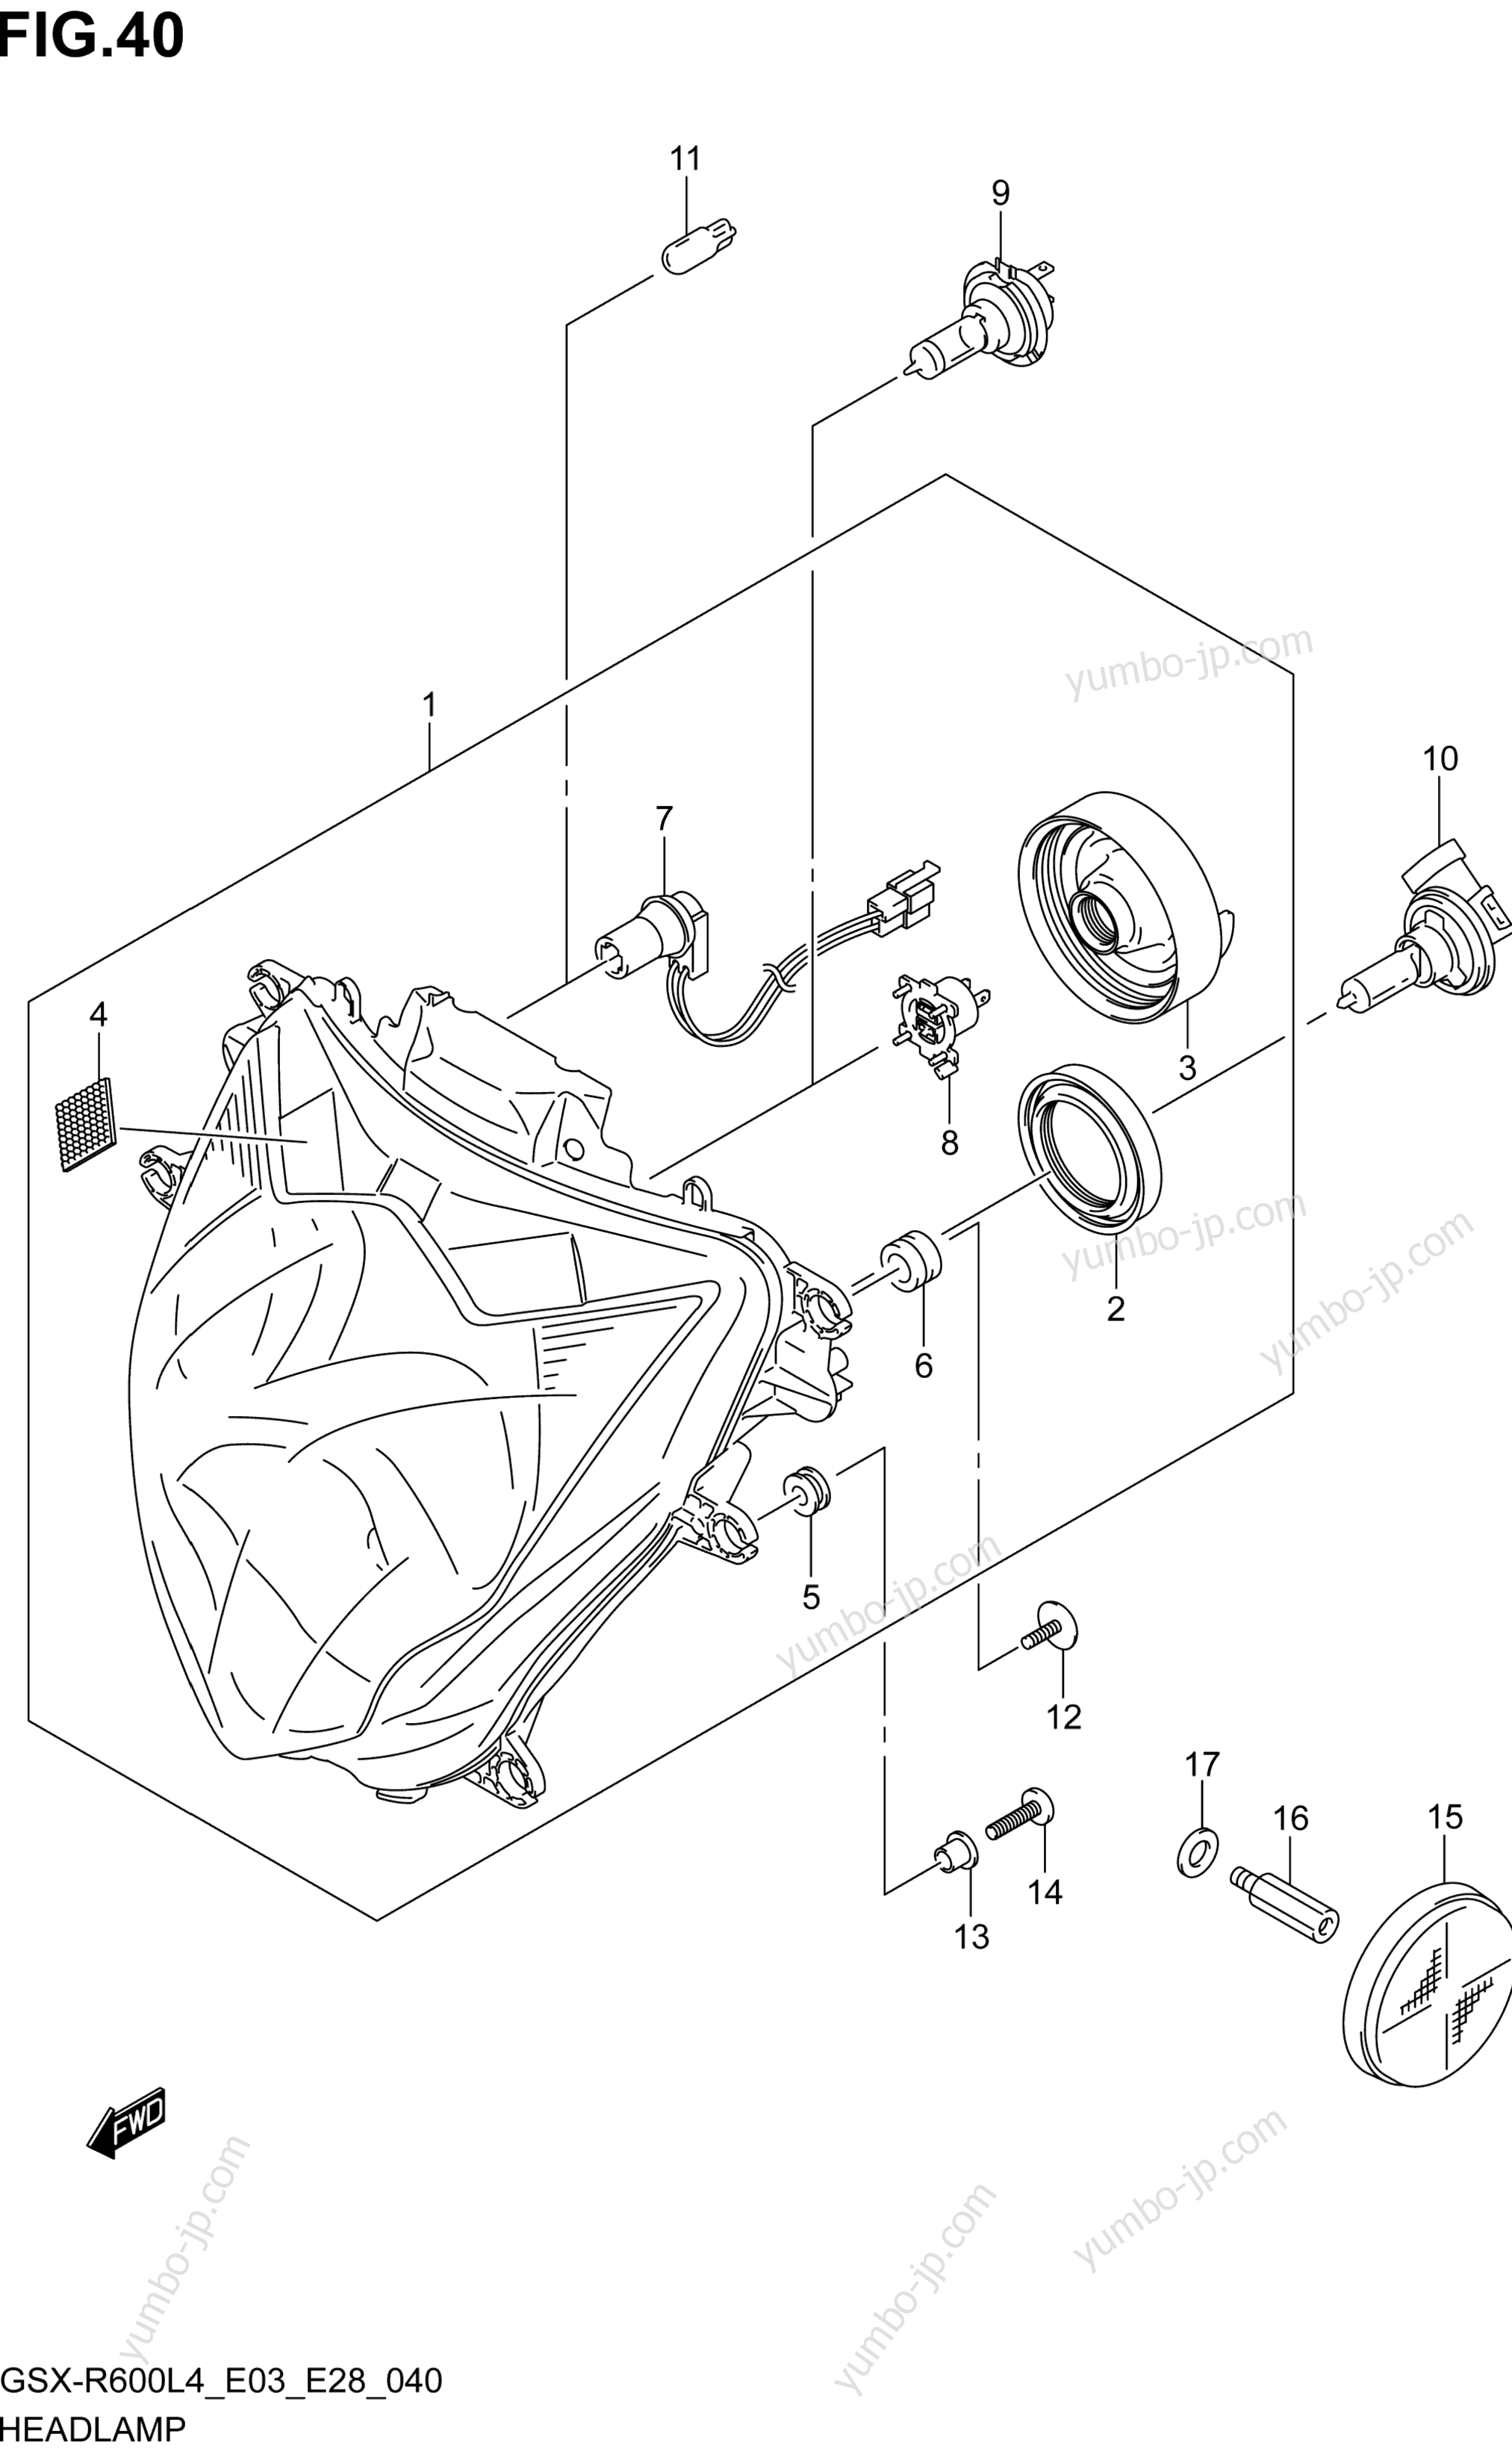 HEADLAMP (GSX-R600L4 E33) for motorcycles SUZUKI GSX-R600 2014 year